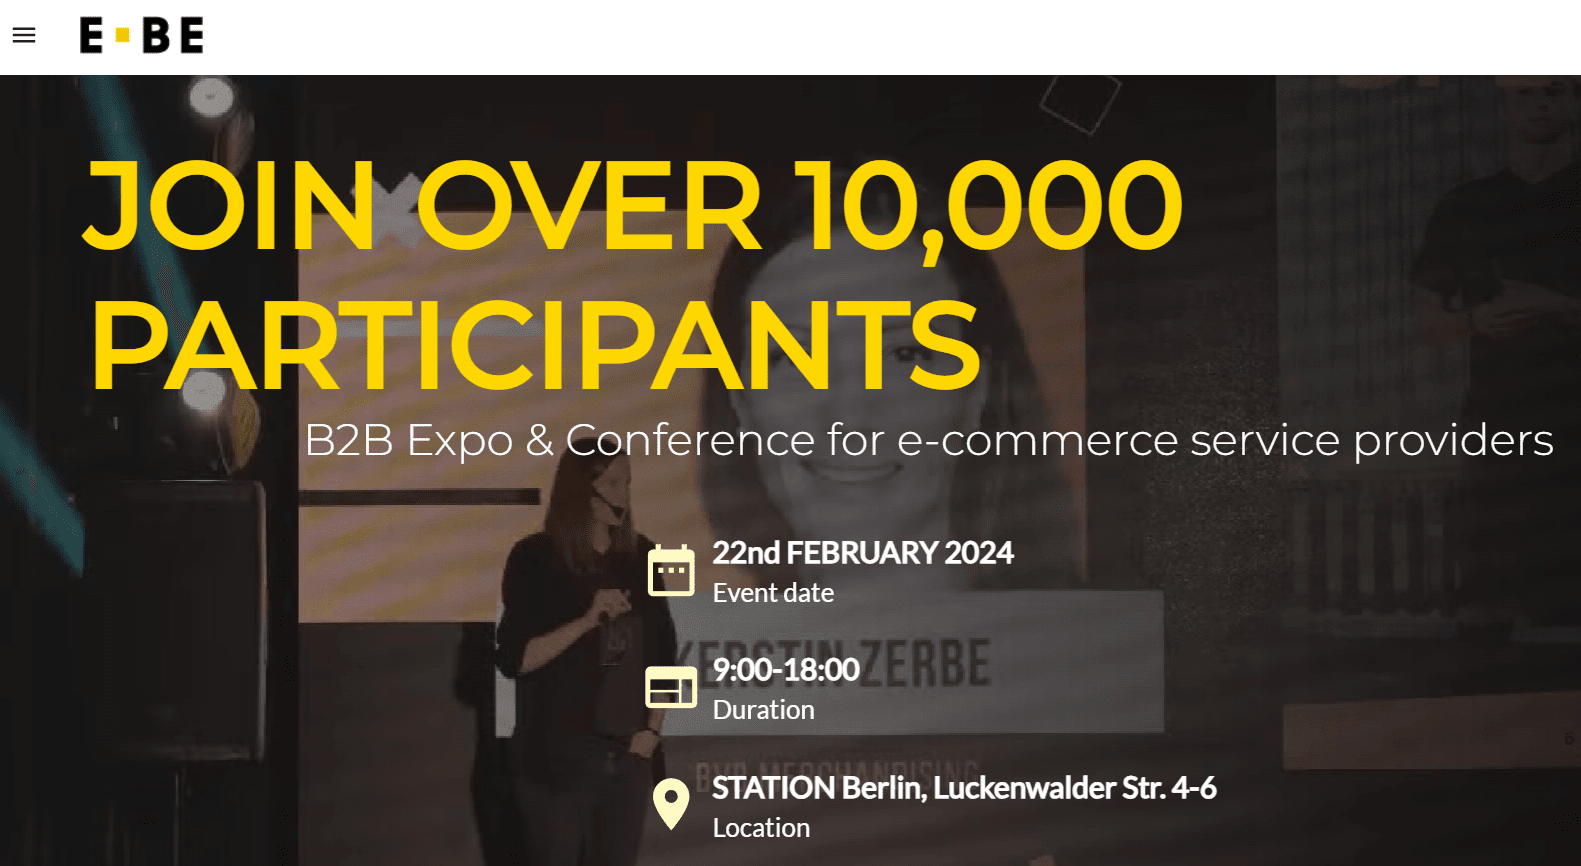 E-Commerce Berlin Expo _ Мероприятие для усиления стратегии email-маркетинга